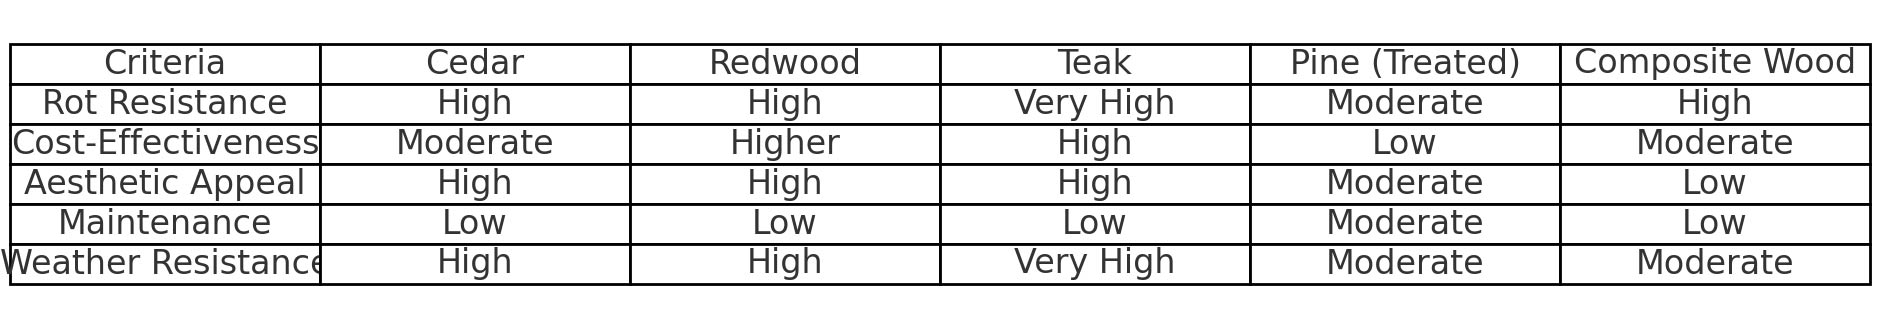 Wood types for planter boxes comparison.